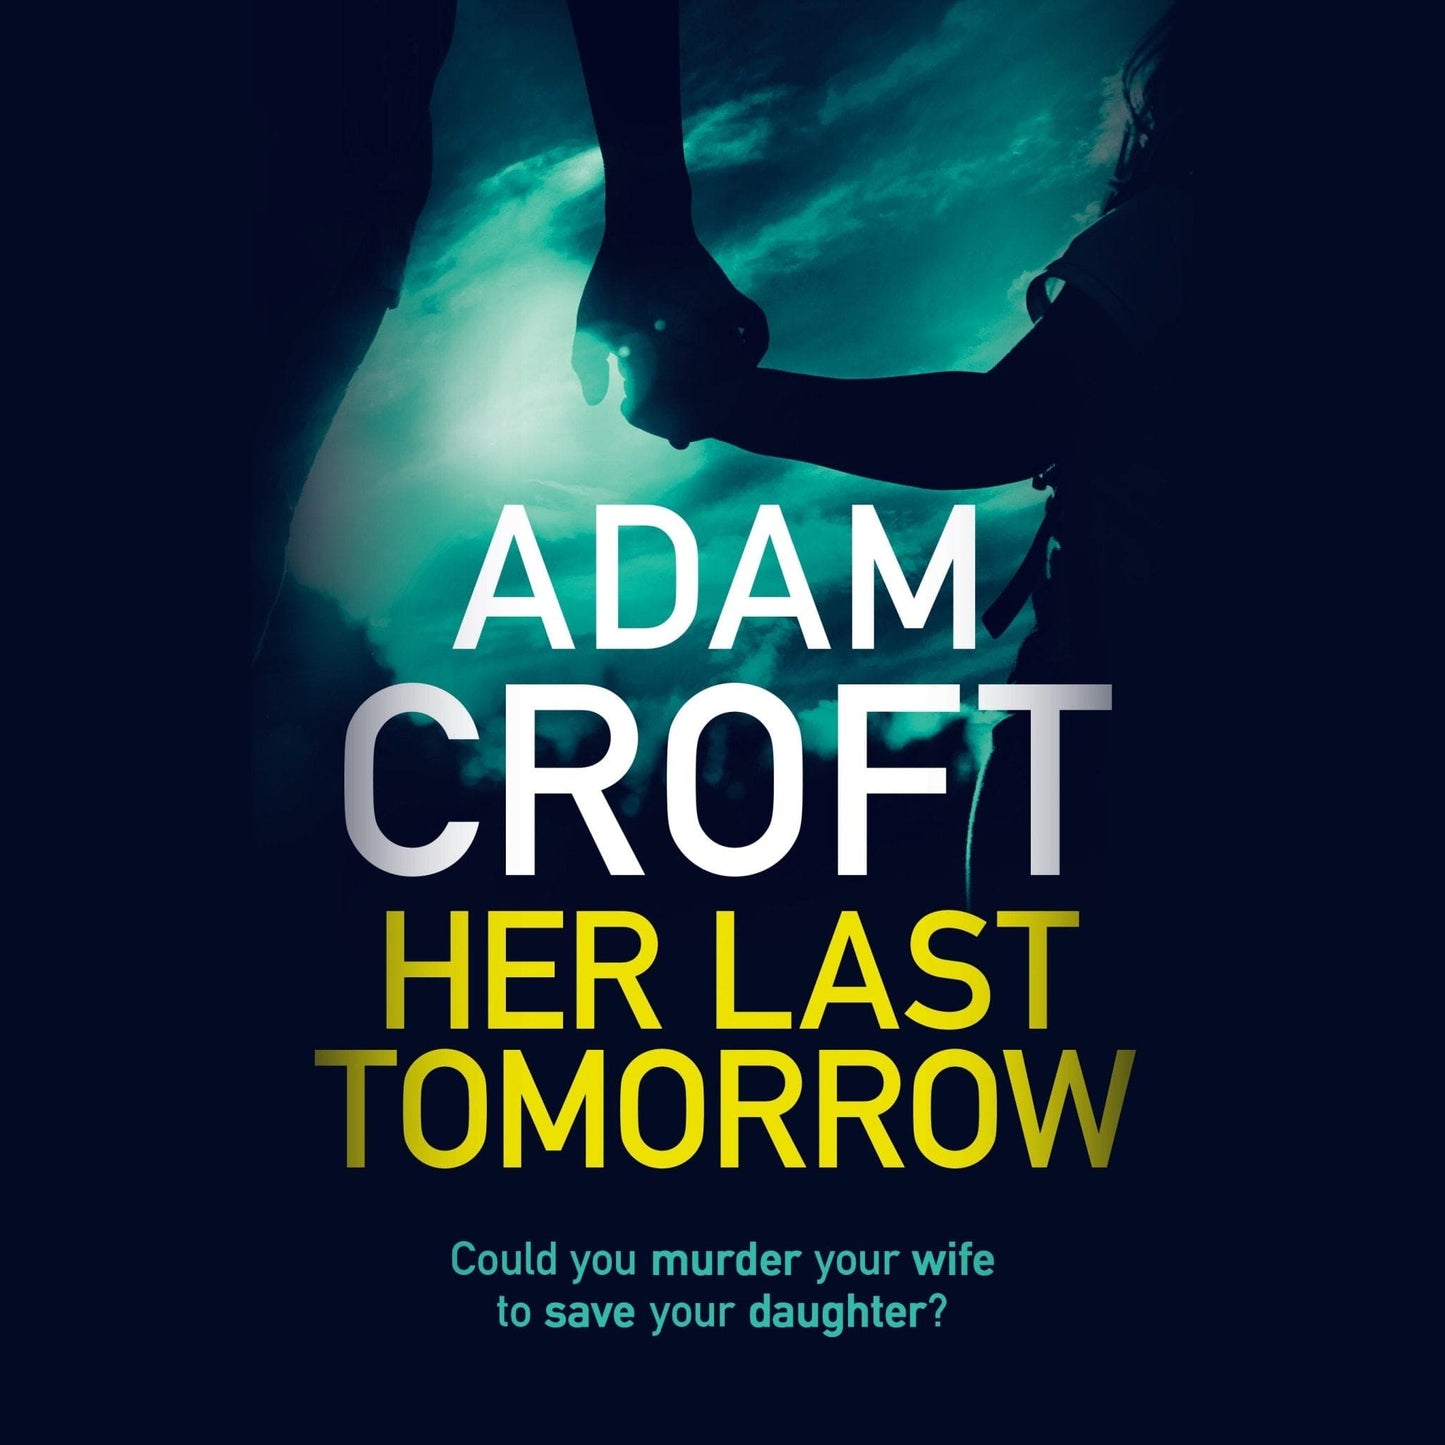 Her Last Tomorrow - Adam Croft